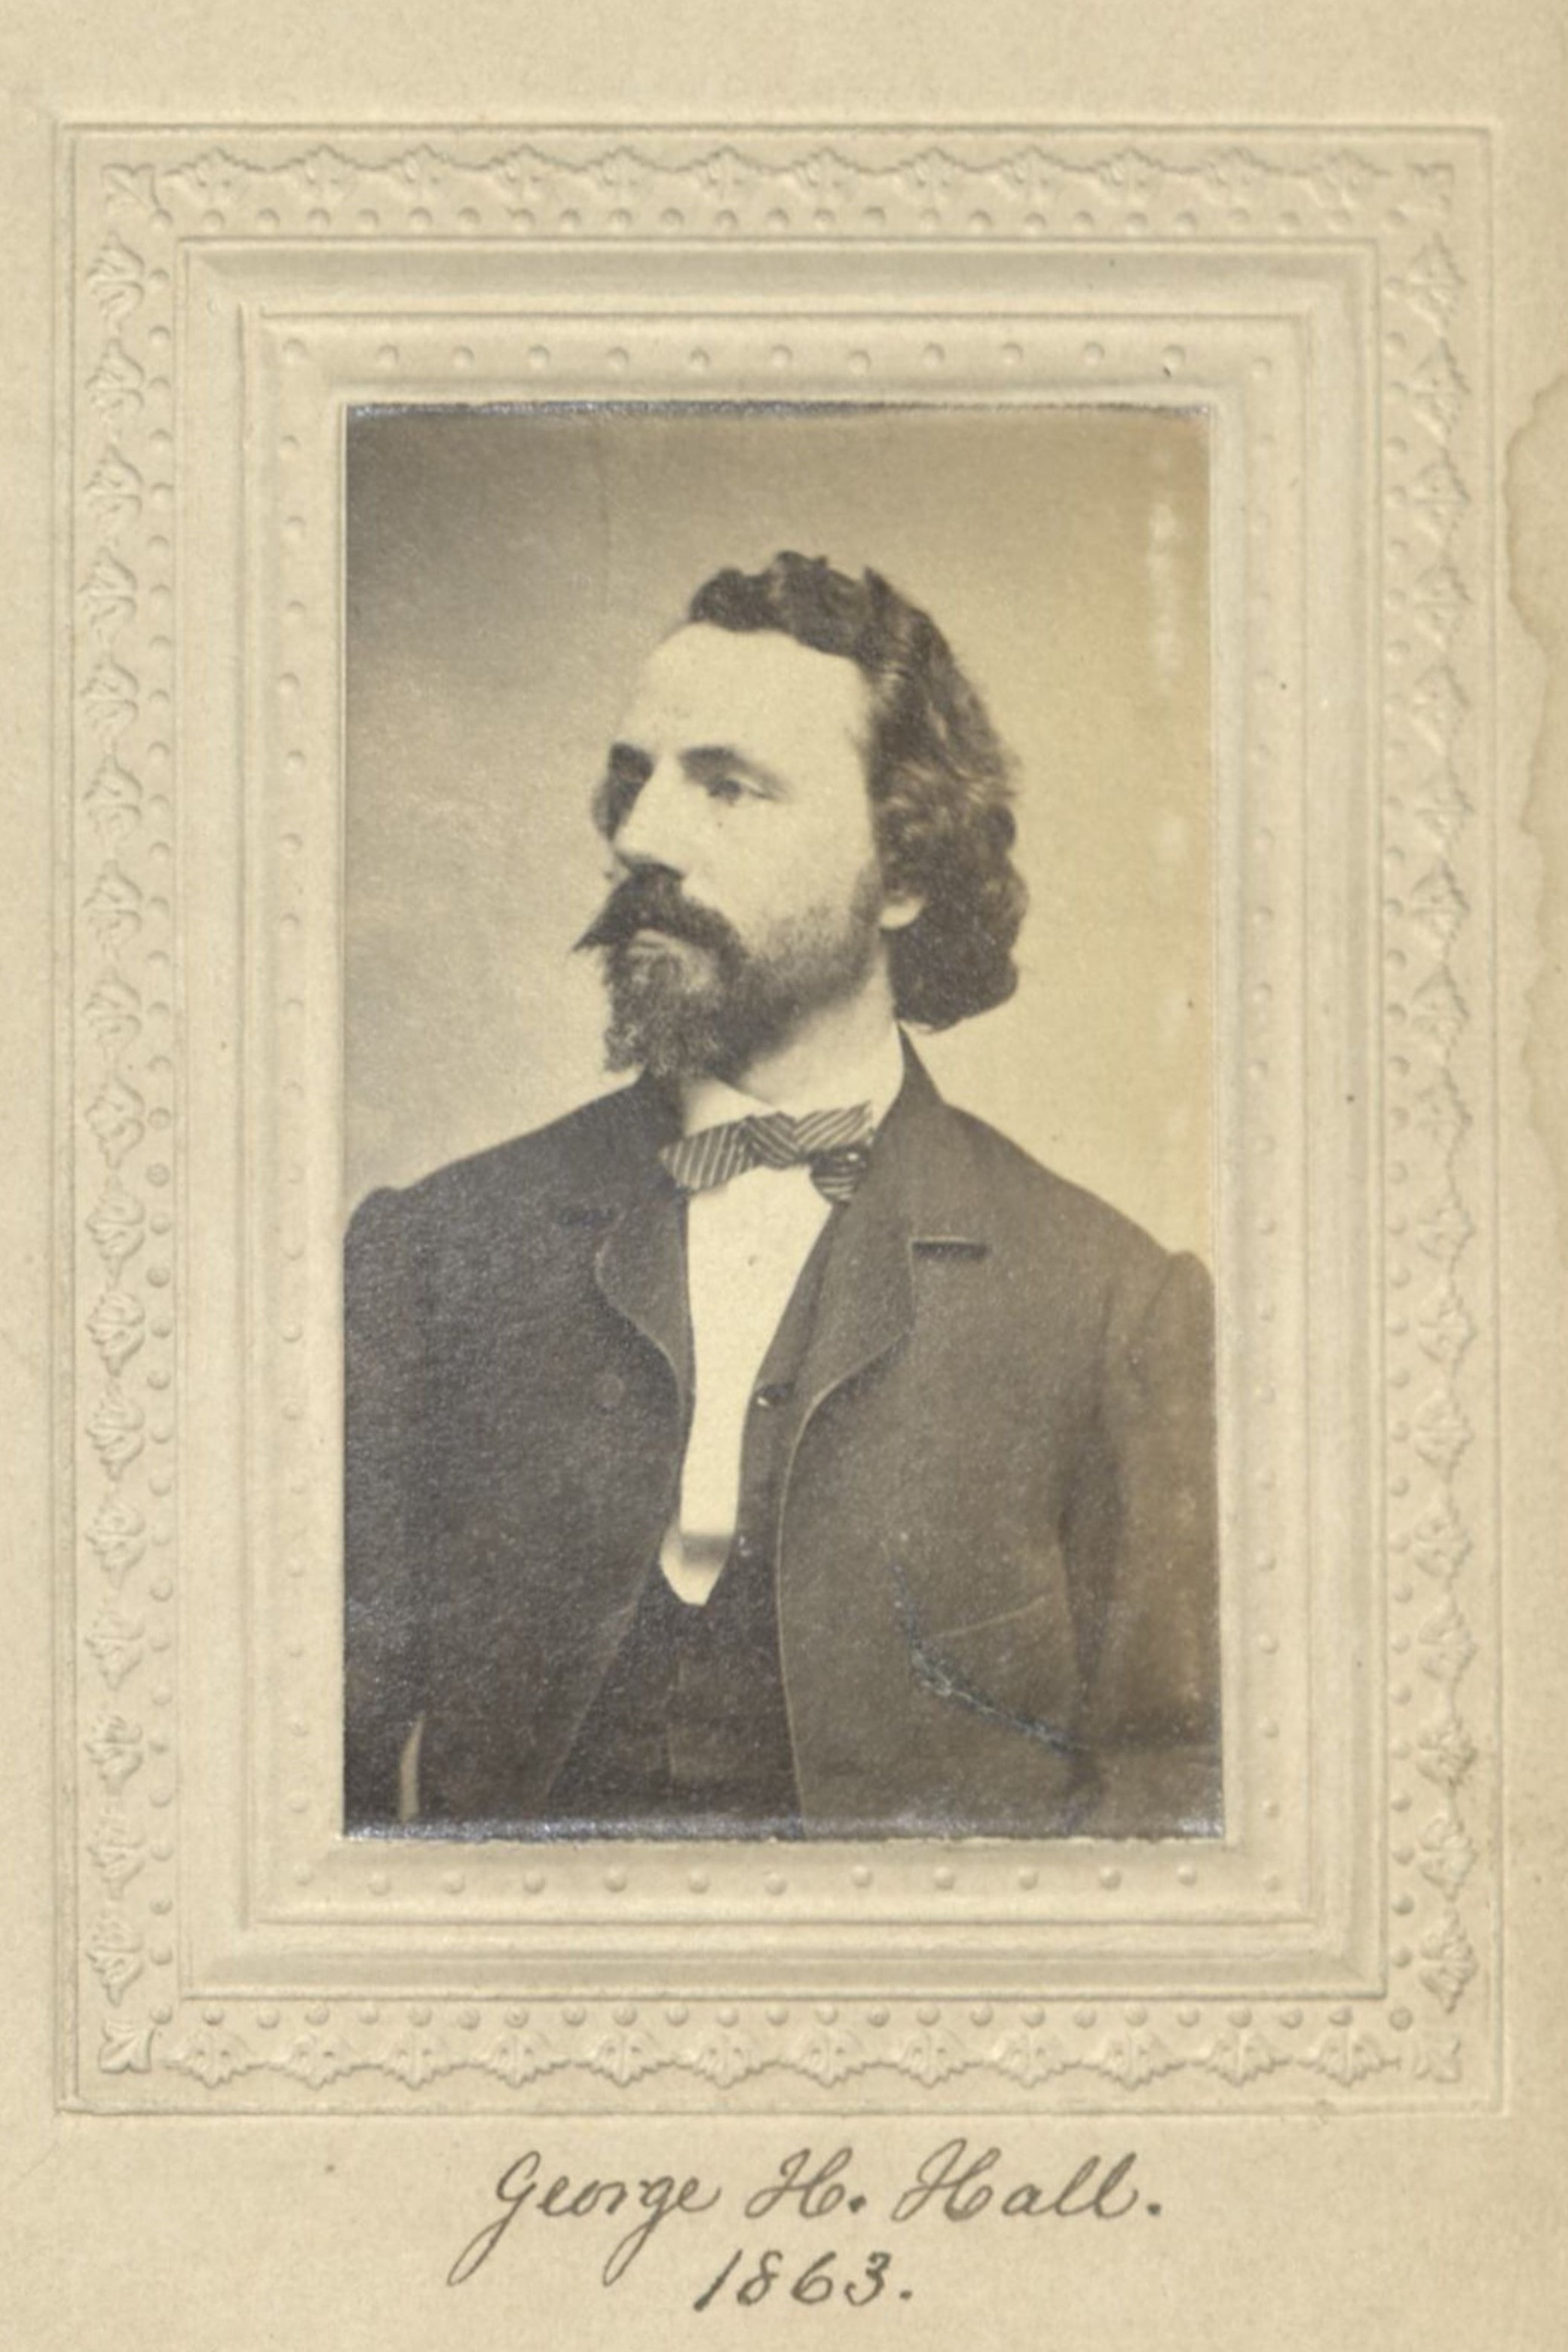 Member portrait of George Henry Hall